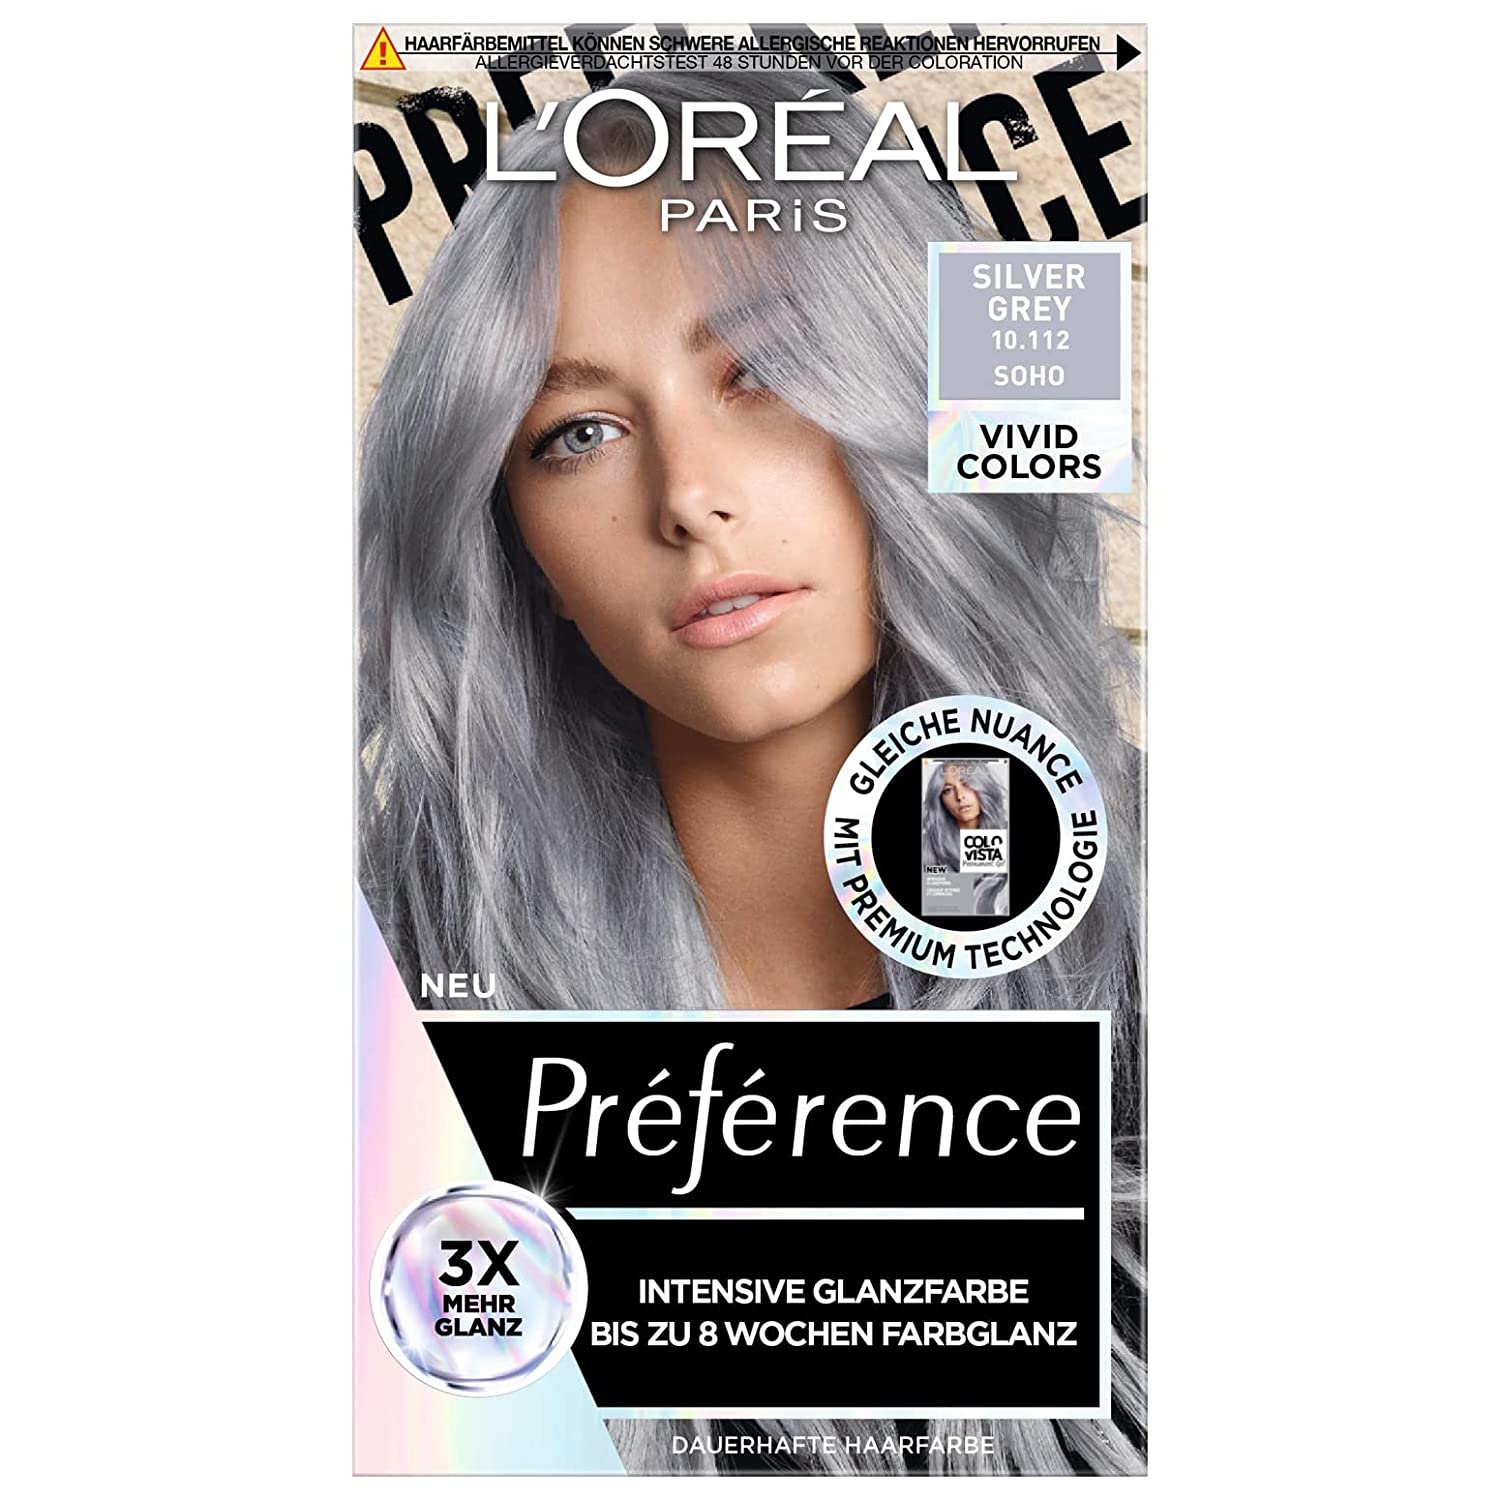 L'Oréal Paris L\'Oréal Paris Intensive dauerhafte Haarfarbe, Bis zu 8 Wochen glänzendes Haar und intensive Farbe, Préférence Vivid Colors, Farbe: 10.112 SILVER GREY, 1 Stück, ‎10.112 grey